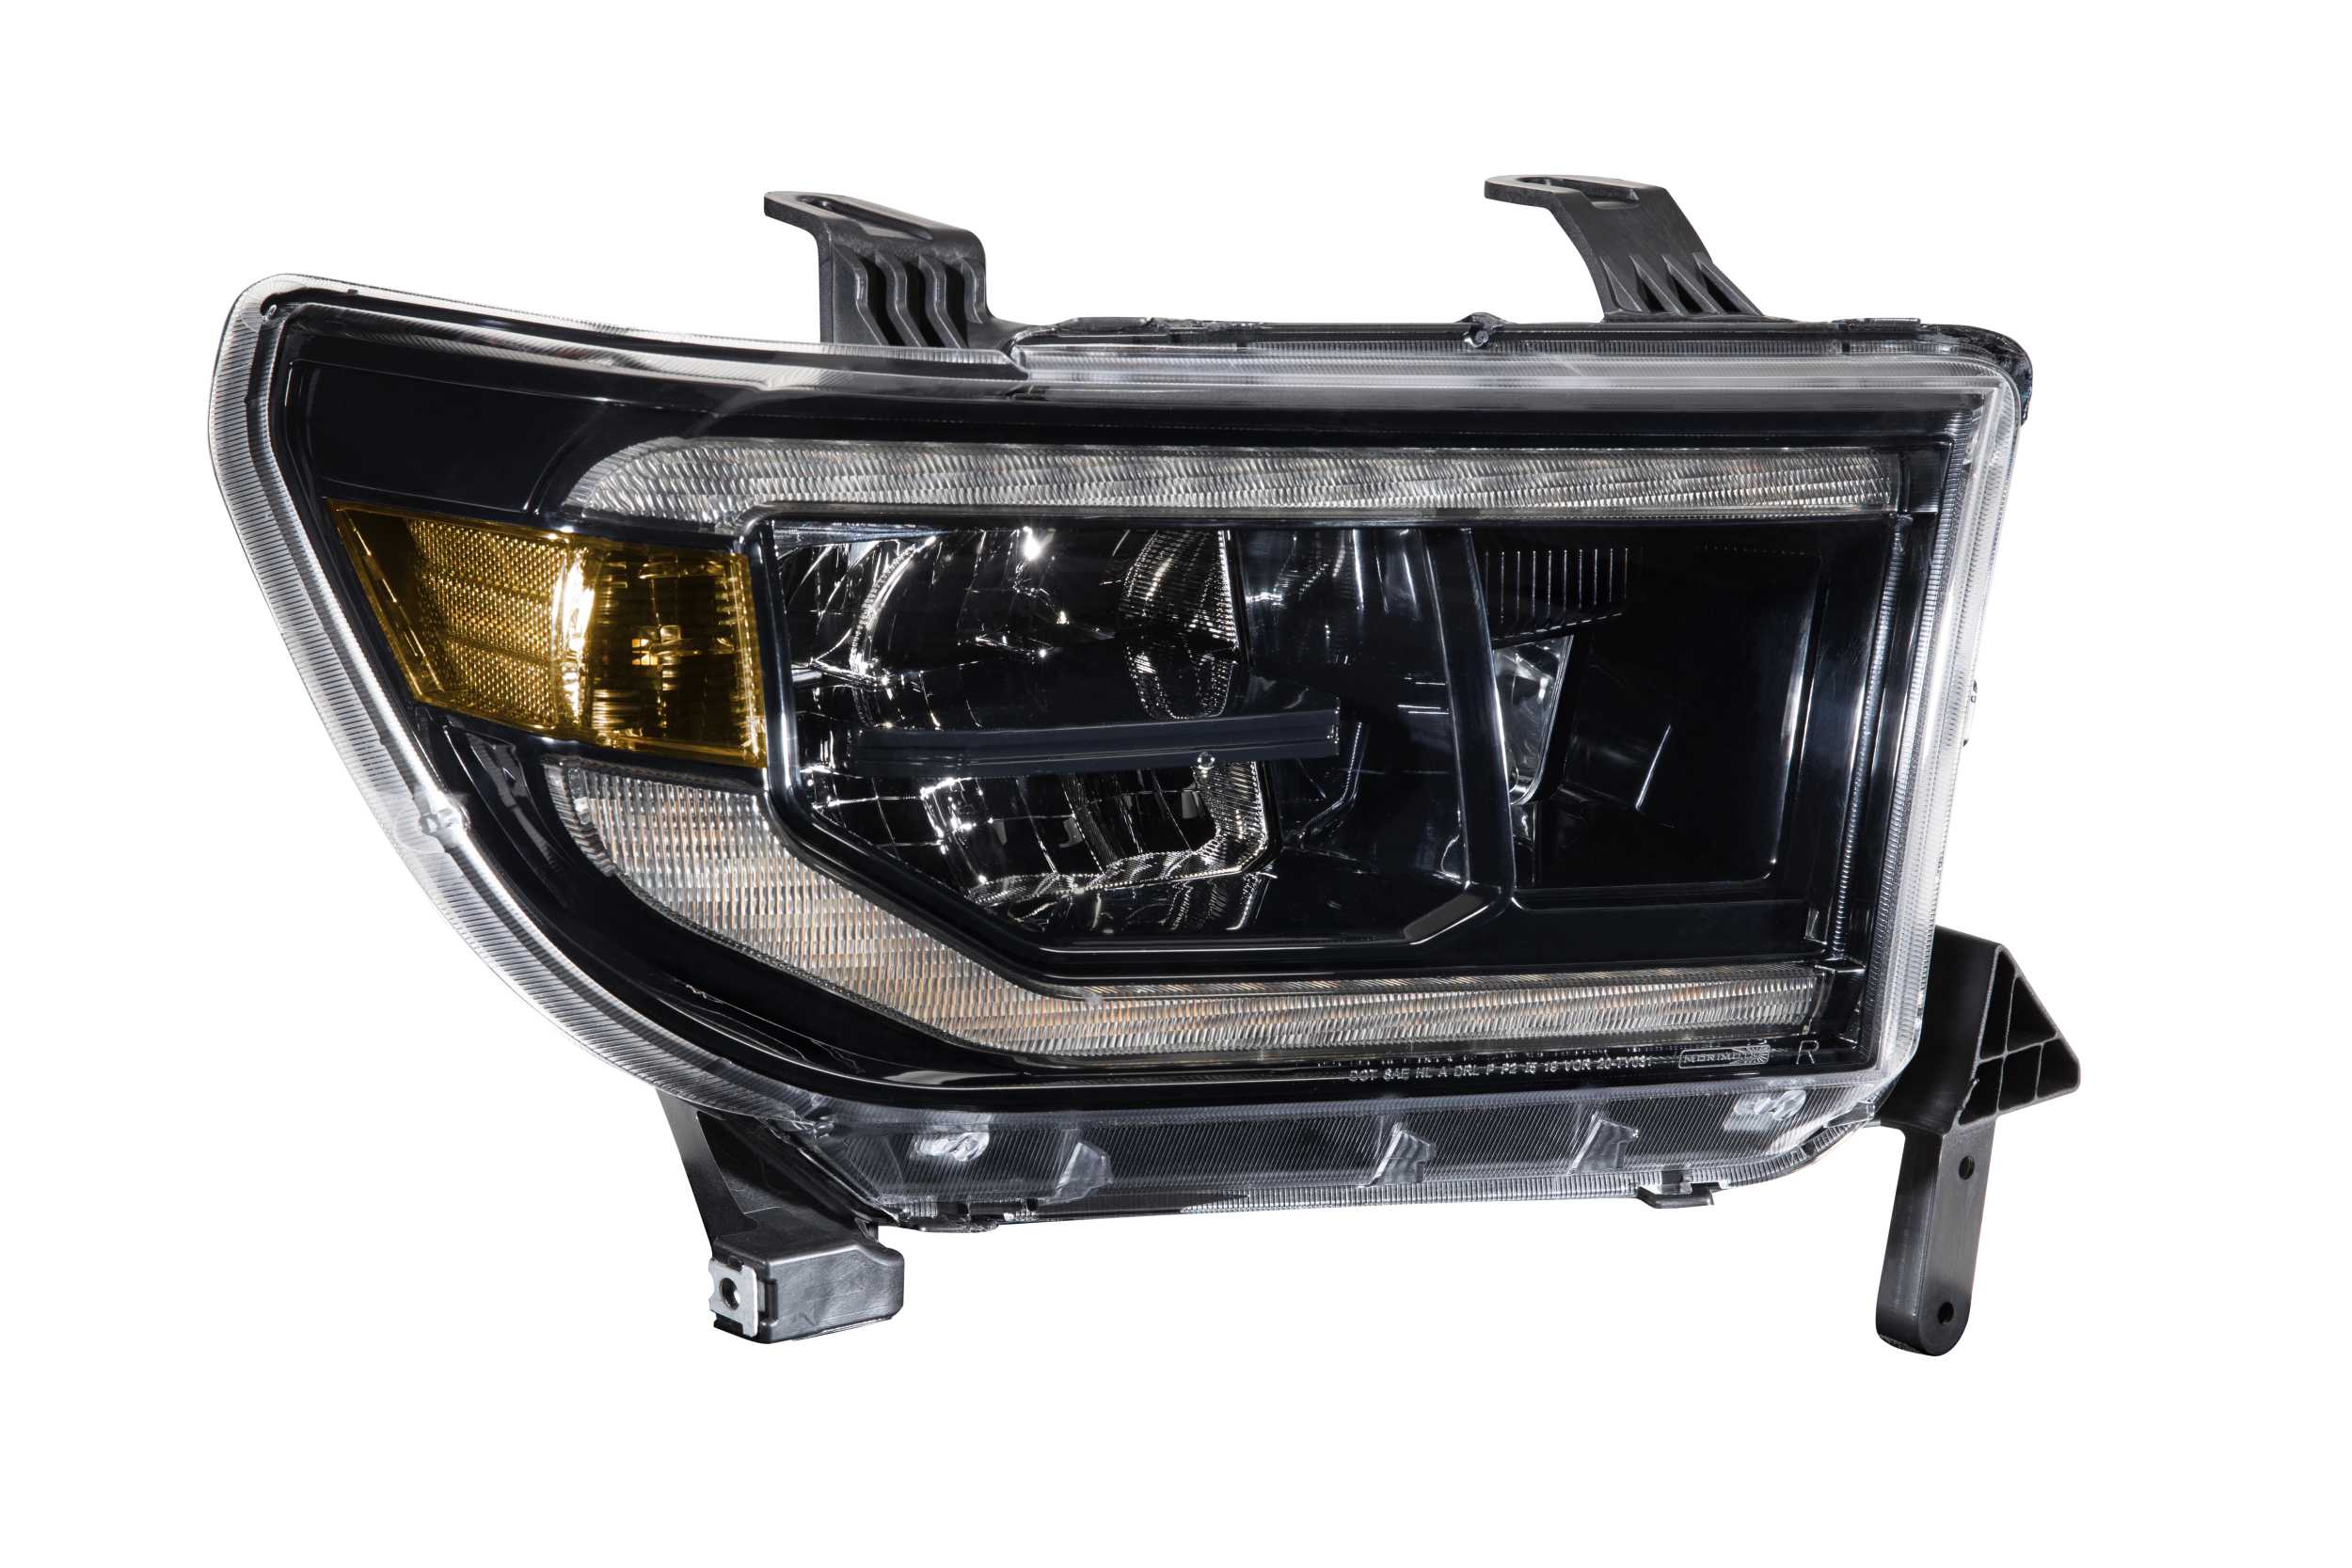 Toyota Tundra (07-13): Morimoto XB LED Headlights (Amber DRL)-LF533-A-ASM